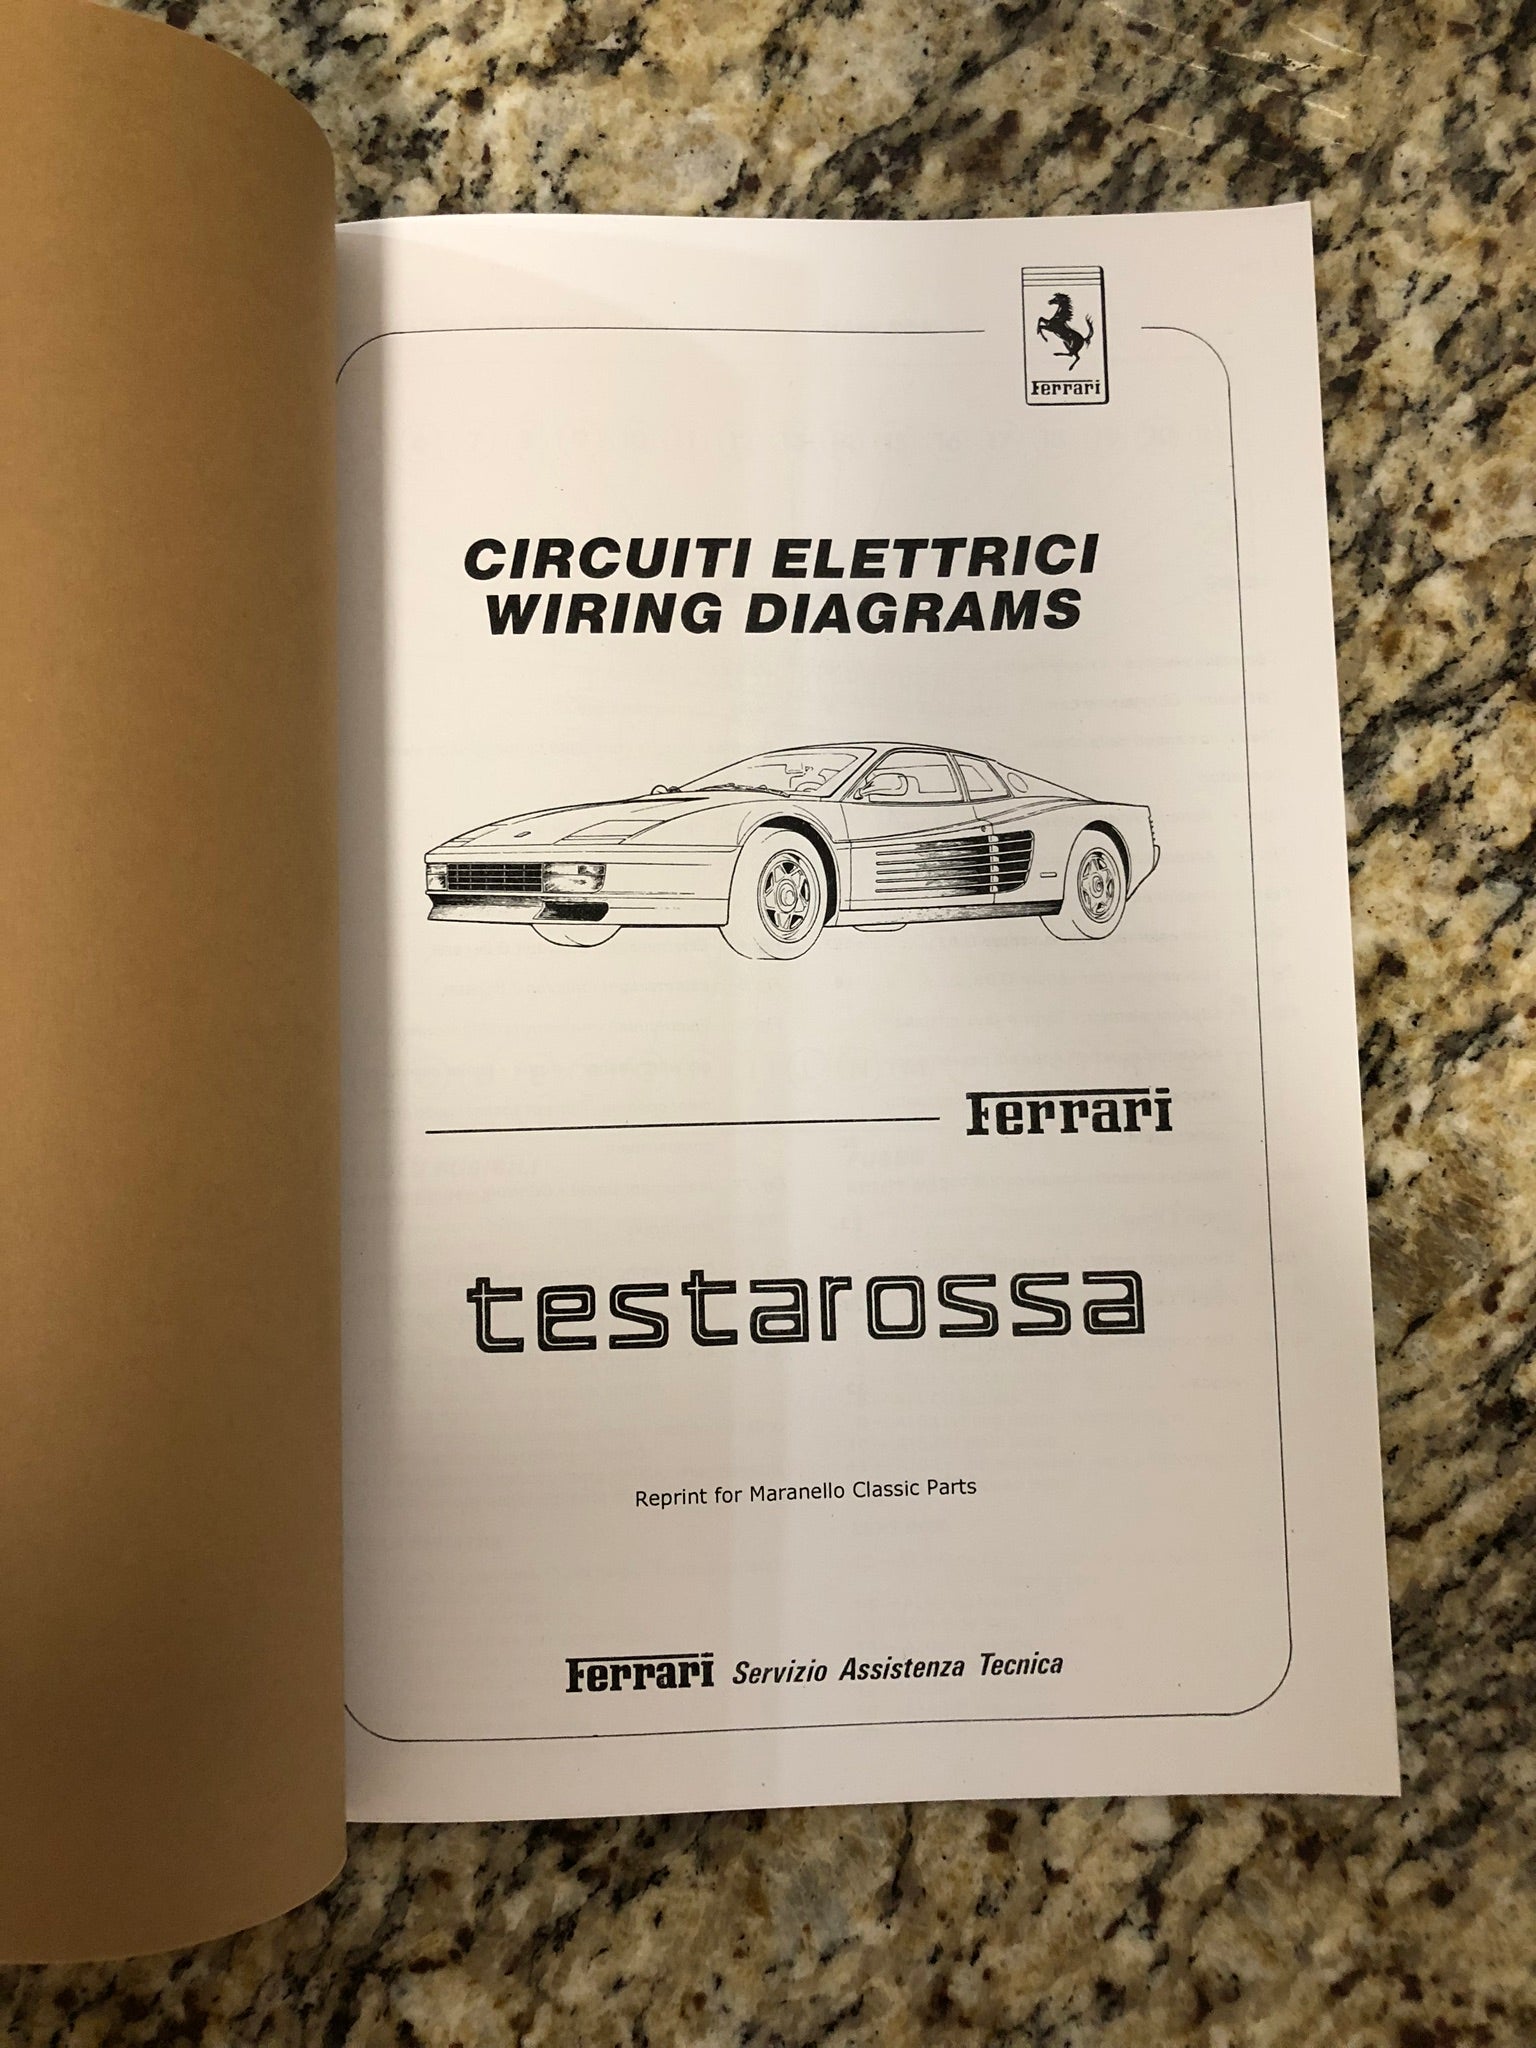 Ferrari Testarossa Electronic wiring diagram 1986